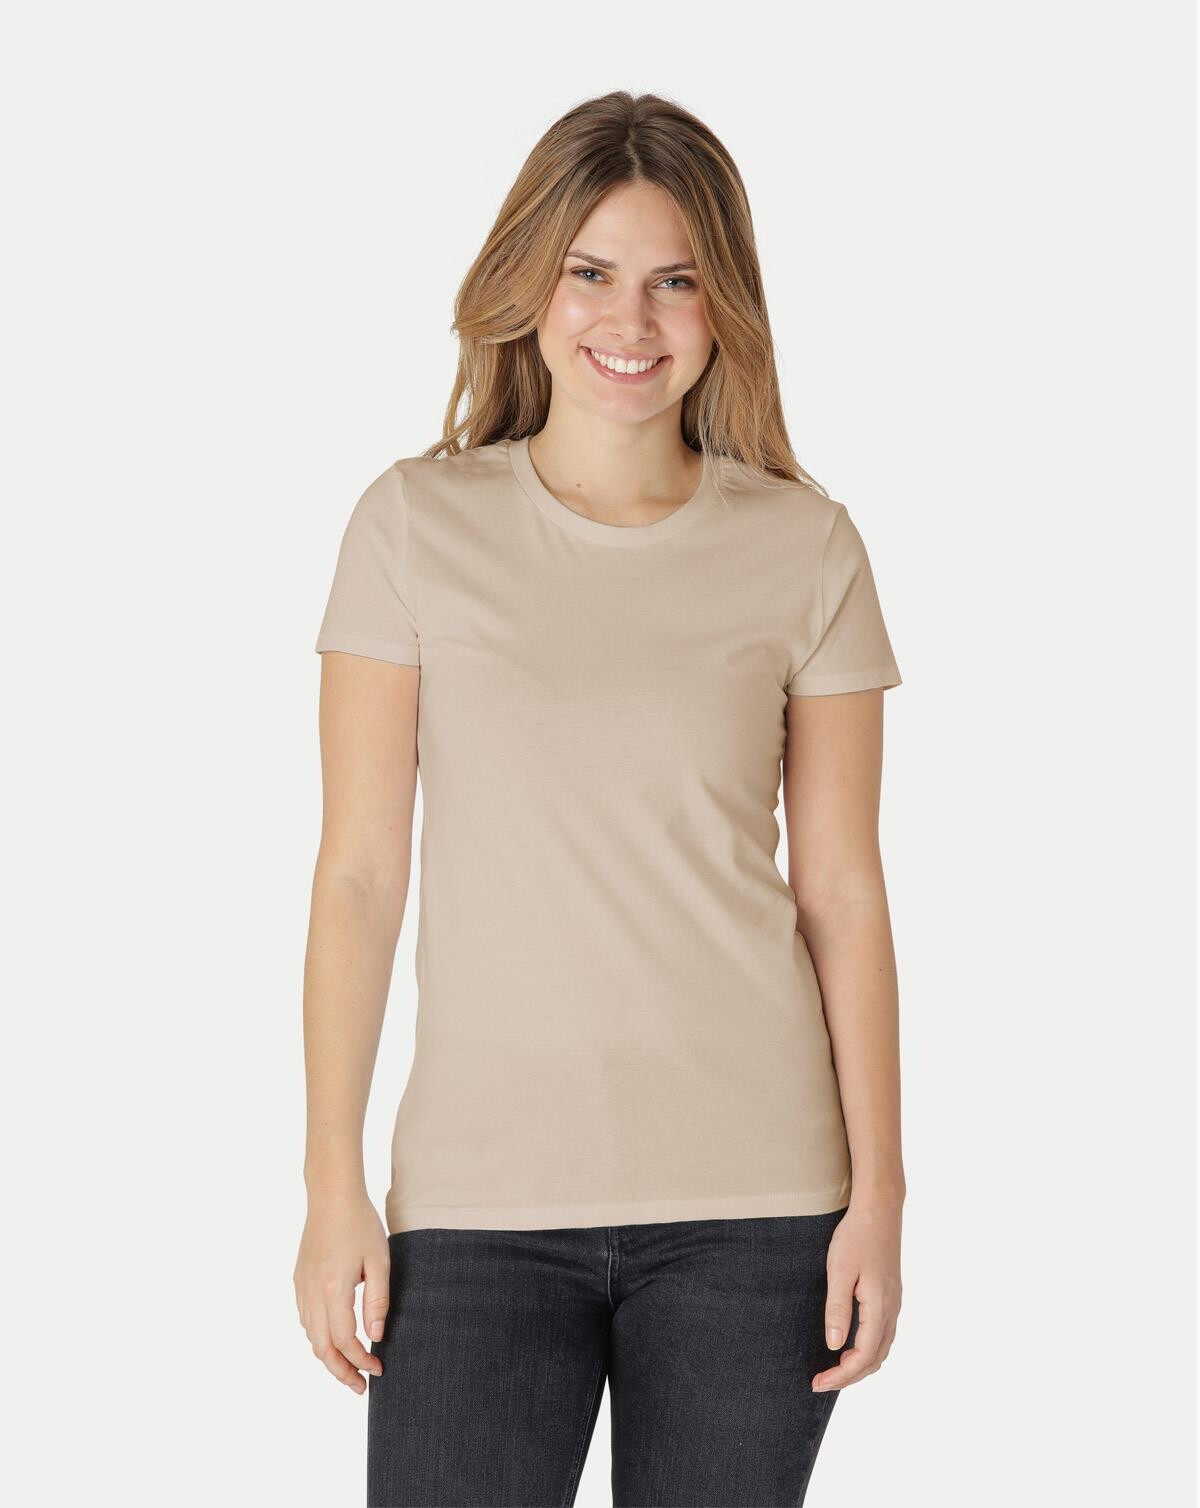 Billede af Neutral Organic - Ladies Fitted T-shirt (Sand, S)